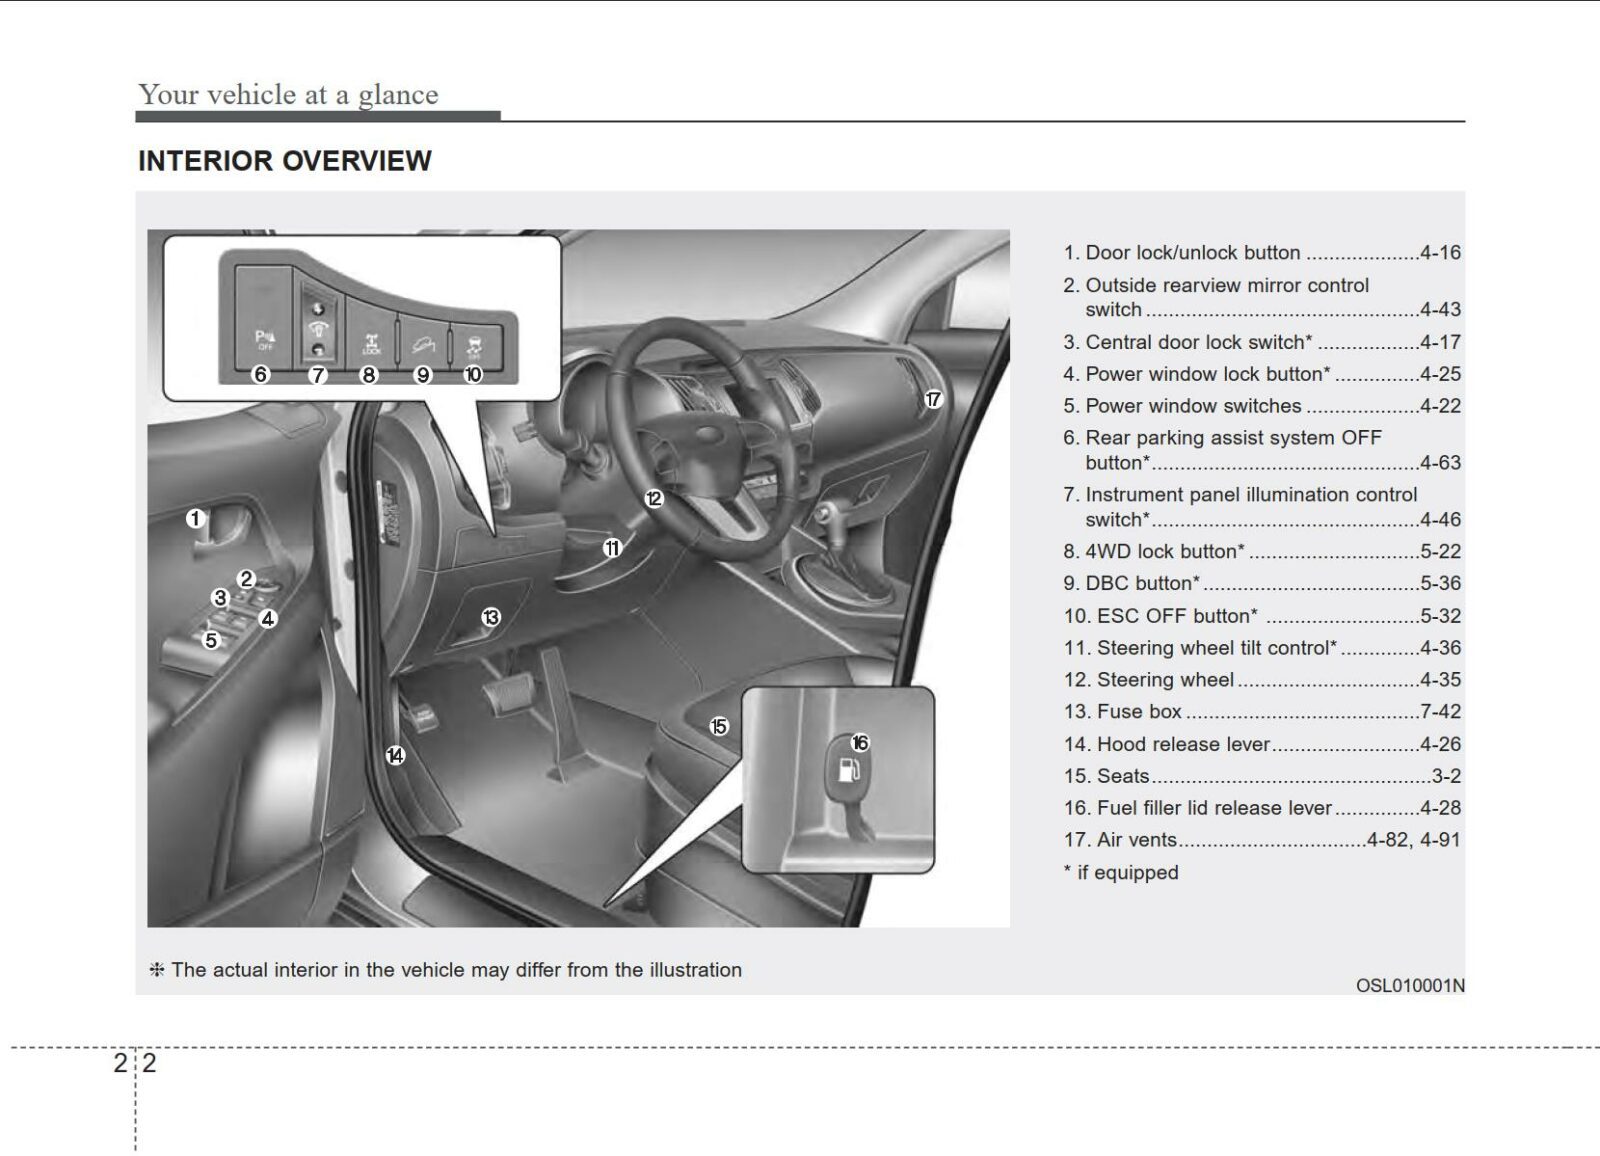 KIA Sportage 2011 Owner's Manual PDF Download